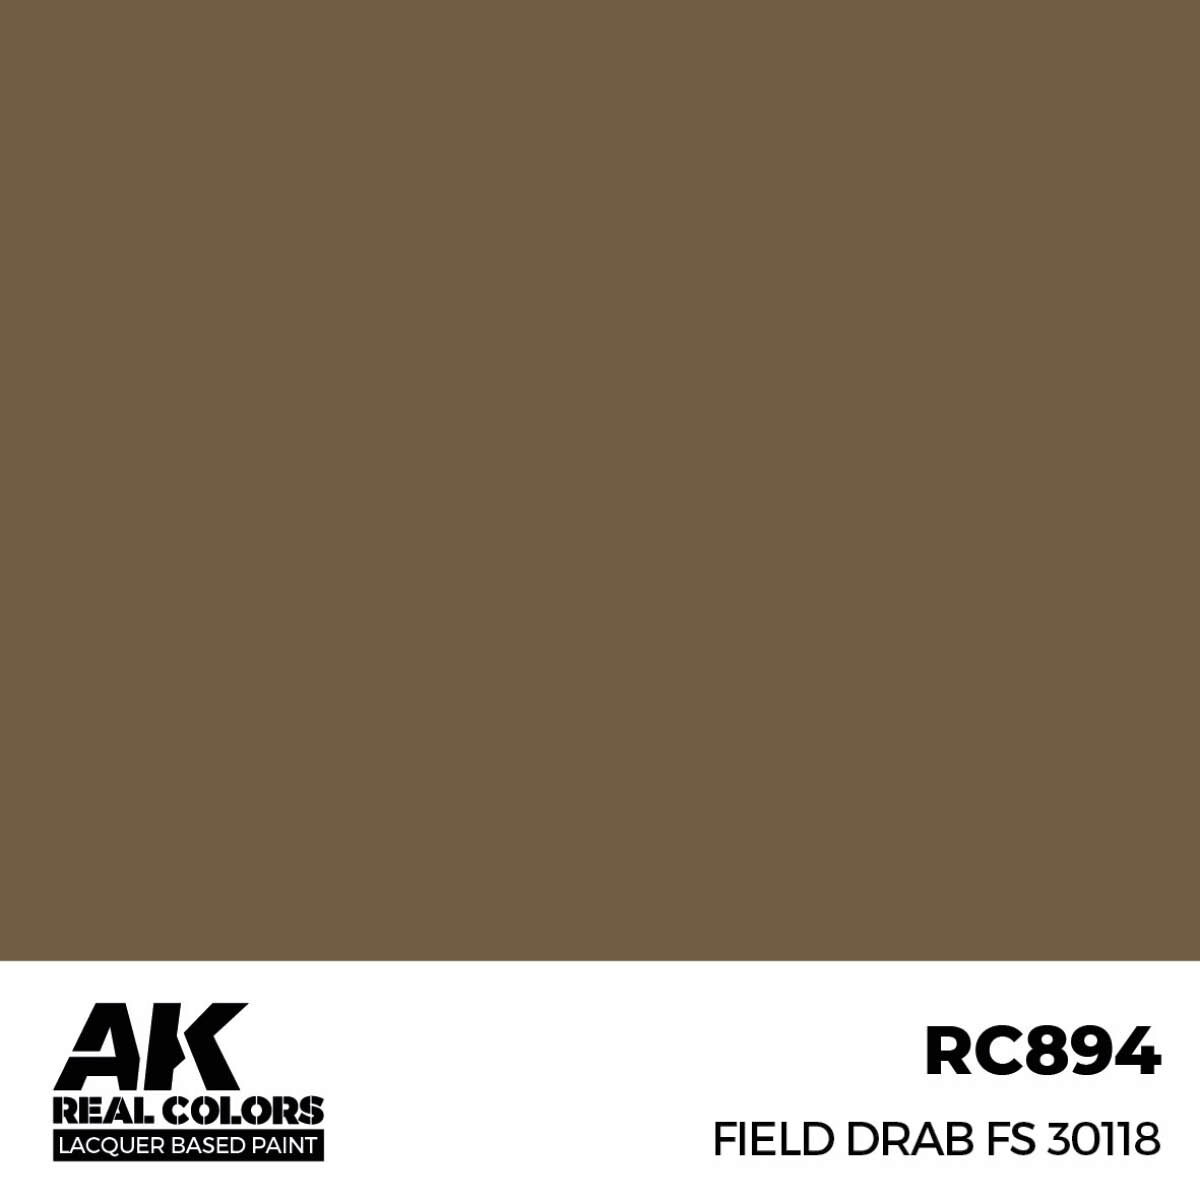 AK RC894 Real Colors Field Drab FS 30118 17 ml.